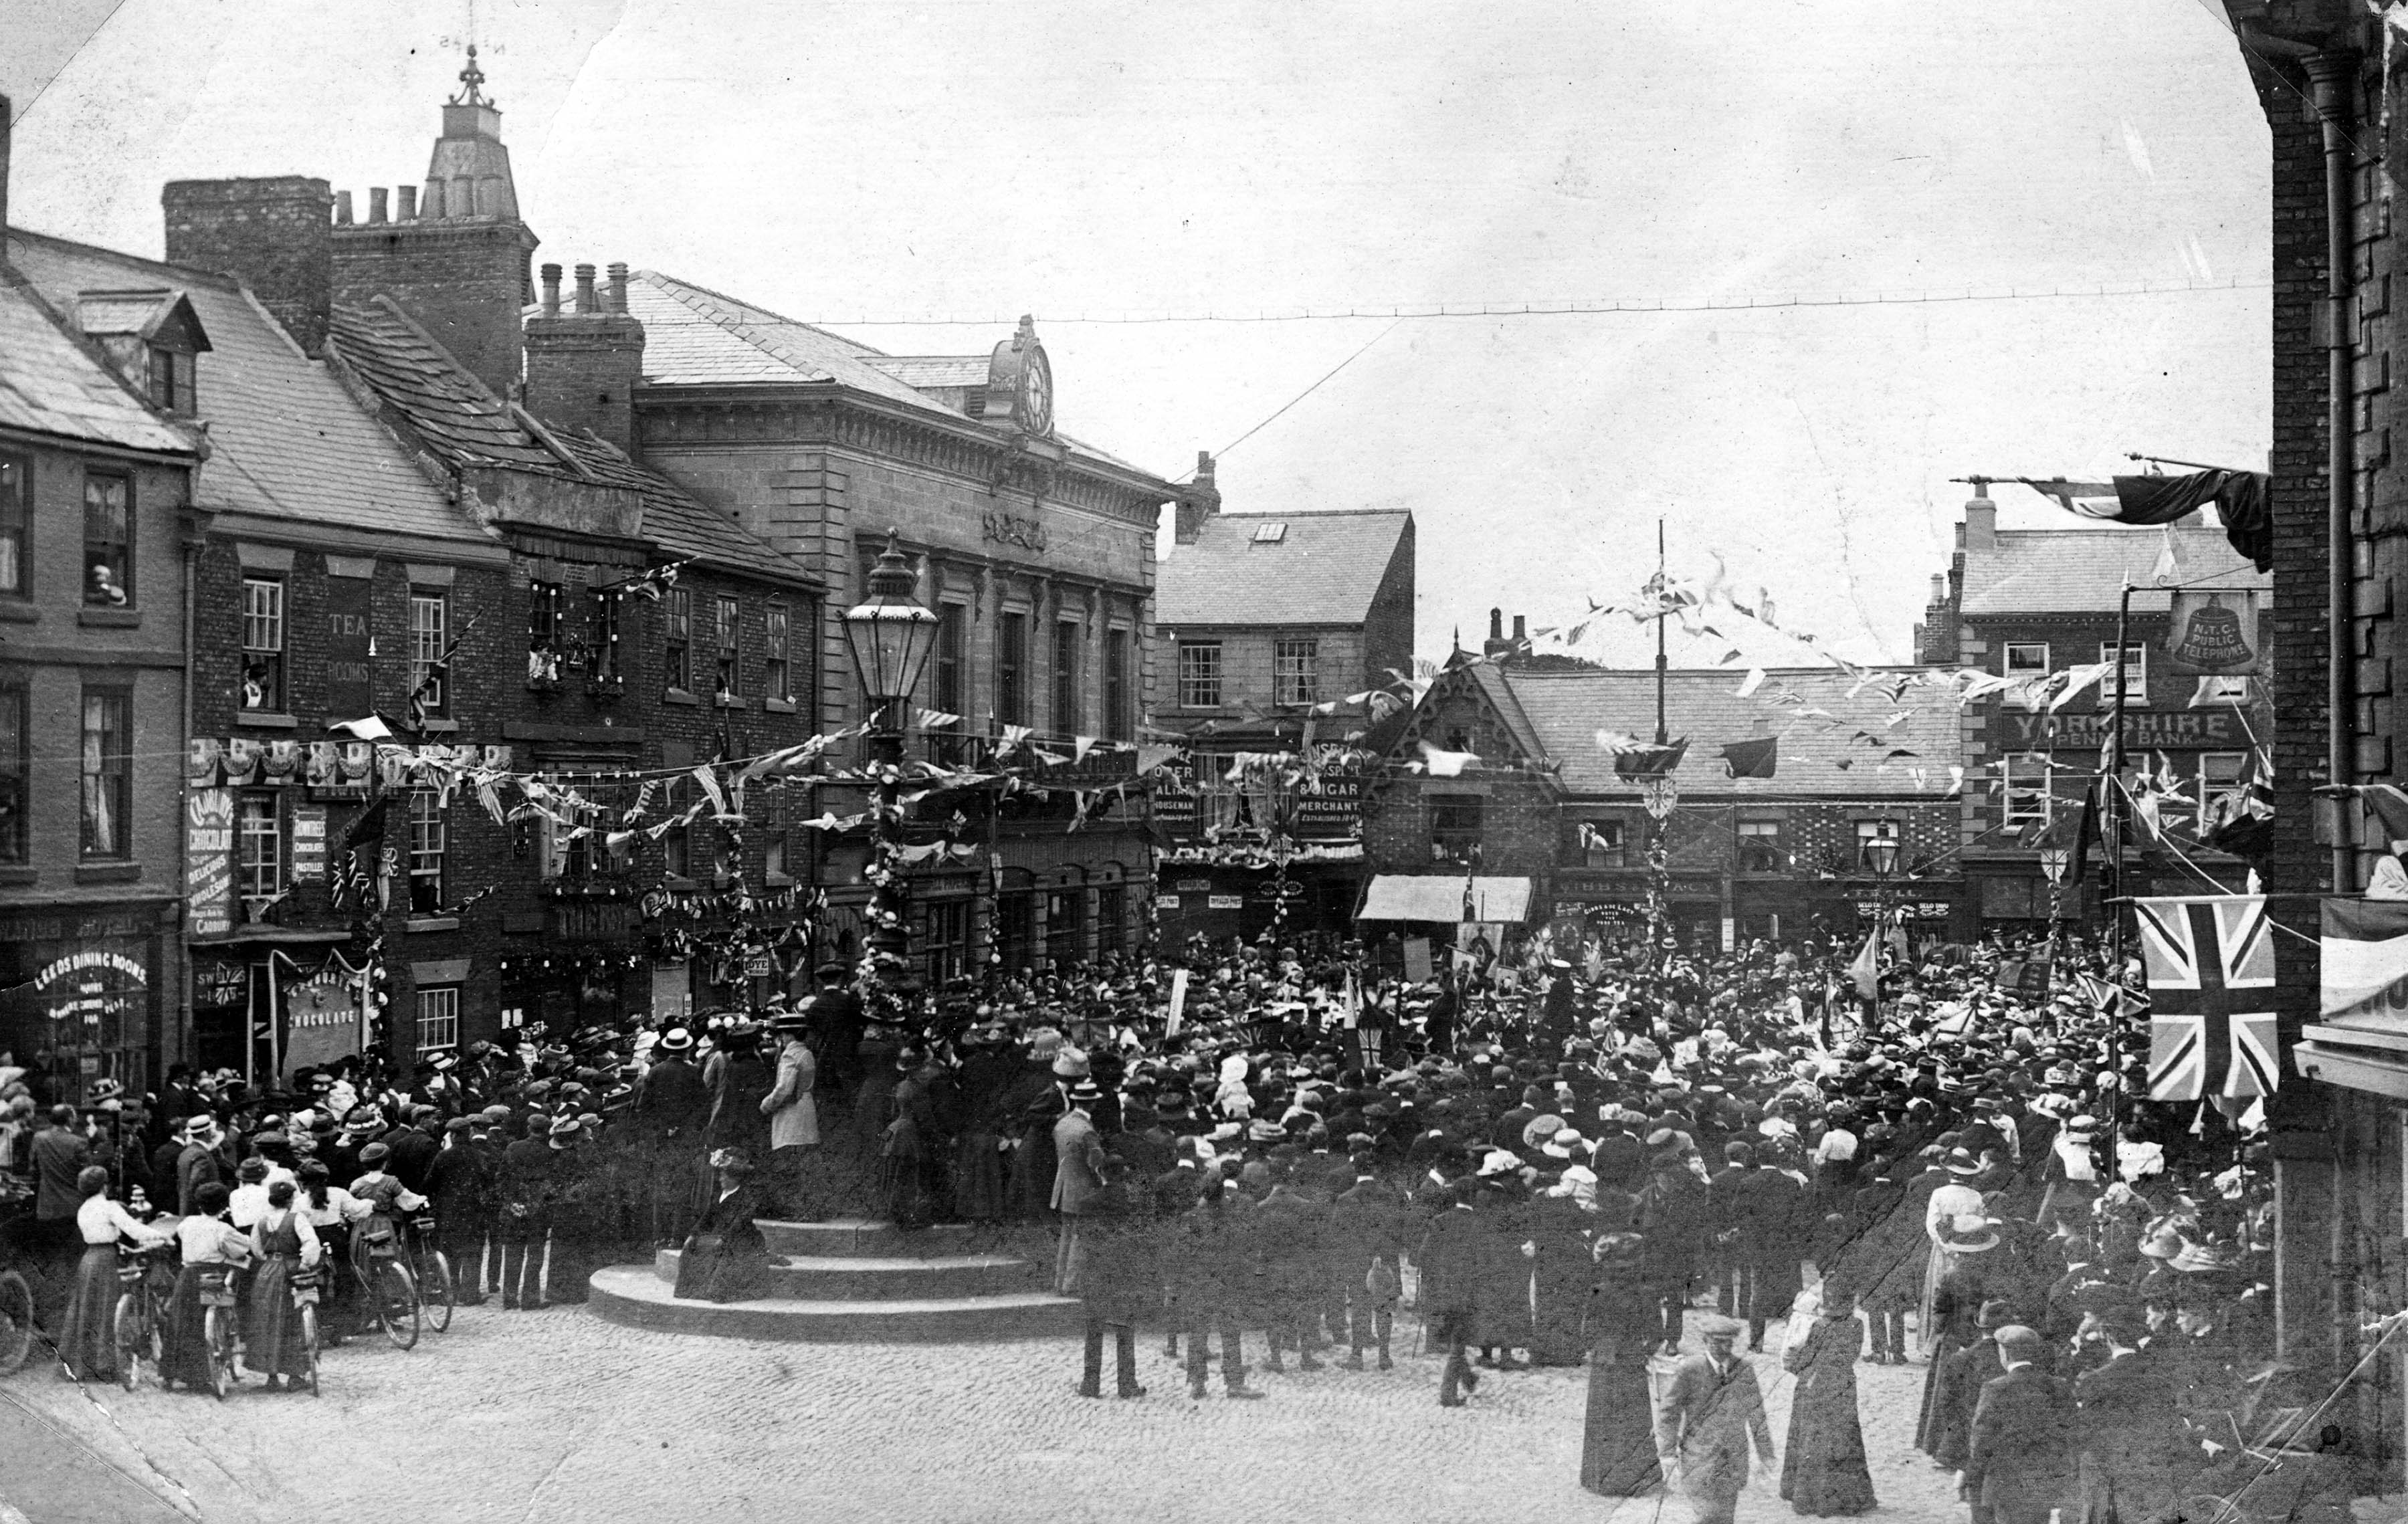 Celebrations in Knaresborough for the Coronation of George V in June 1911.